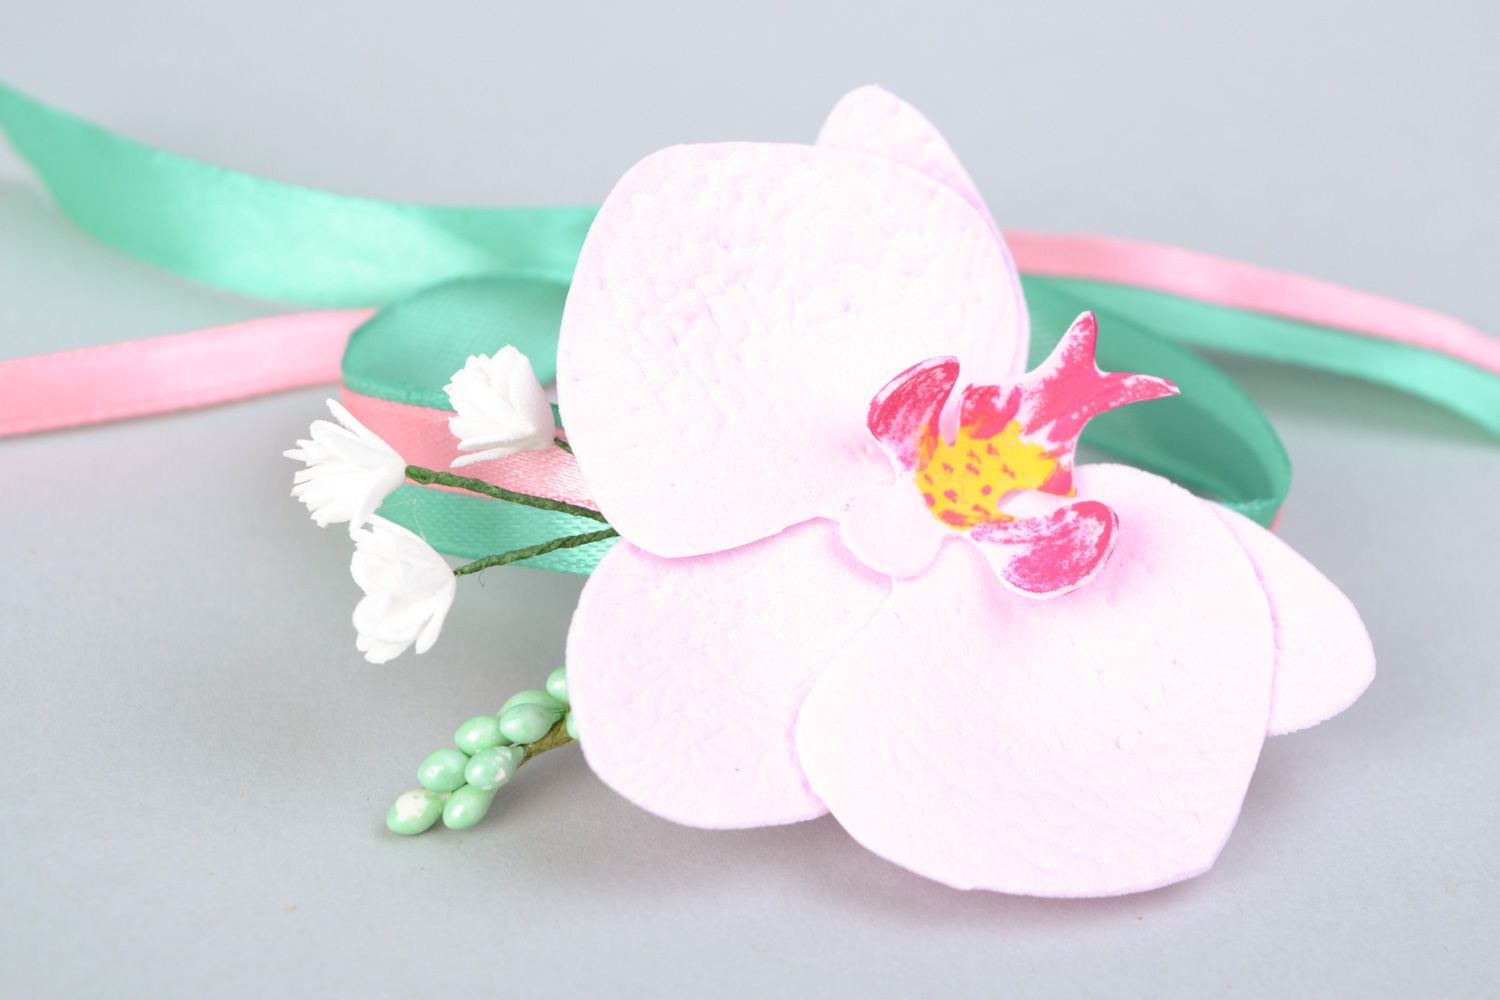 Handmade bracelet designer accessory for wedding flower boutonniere gift ideas photo 4